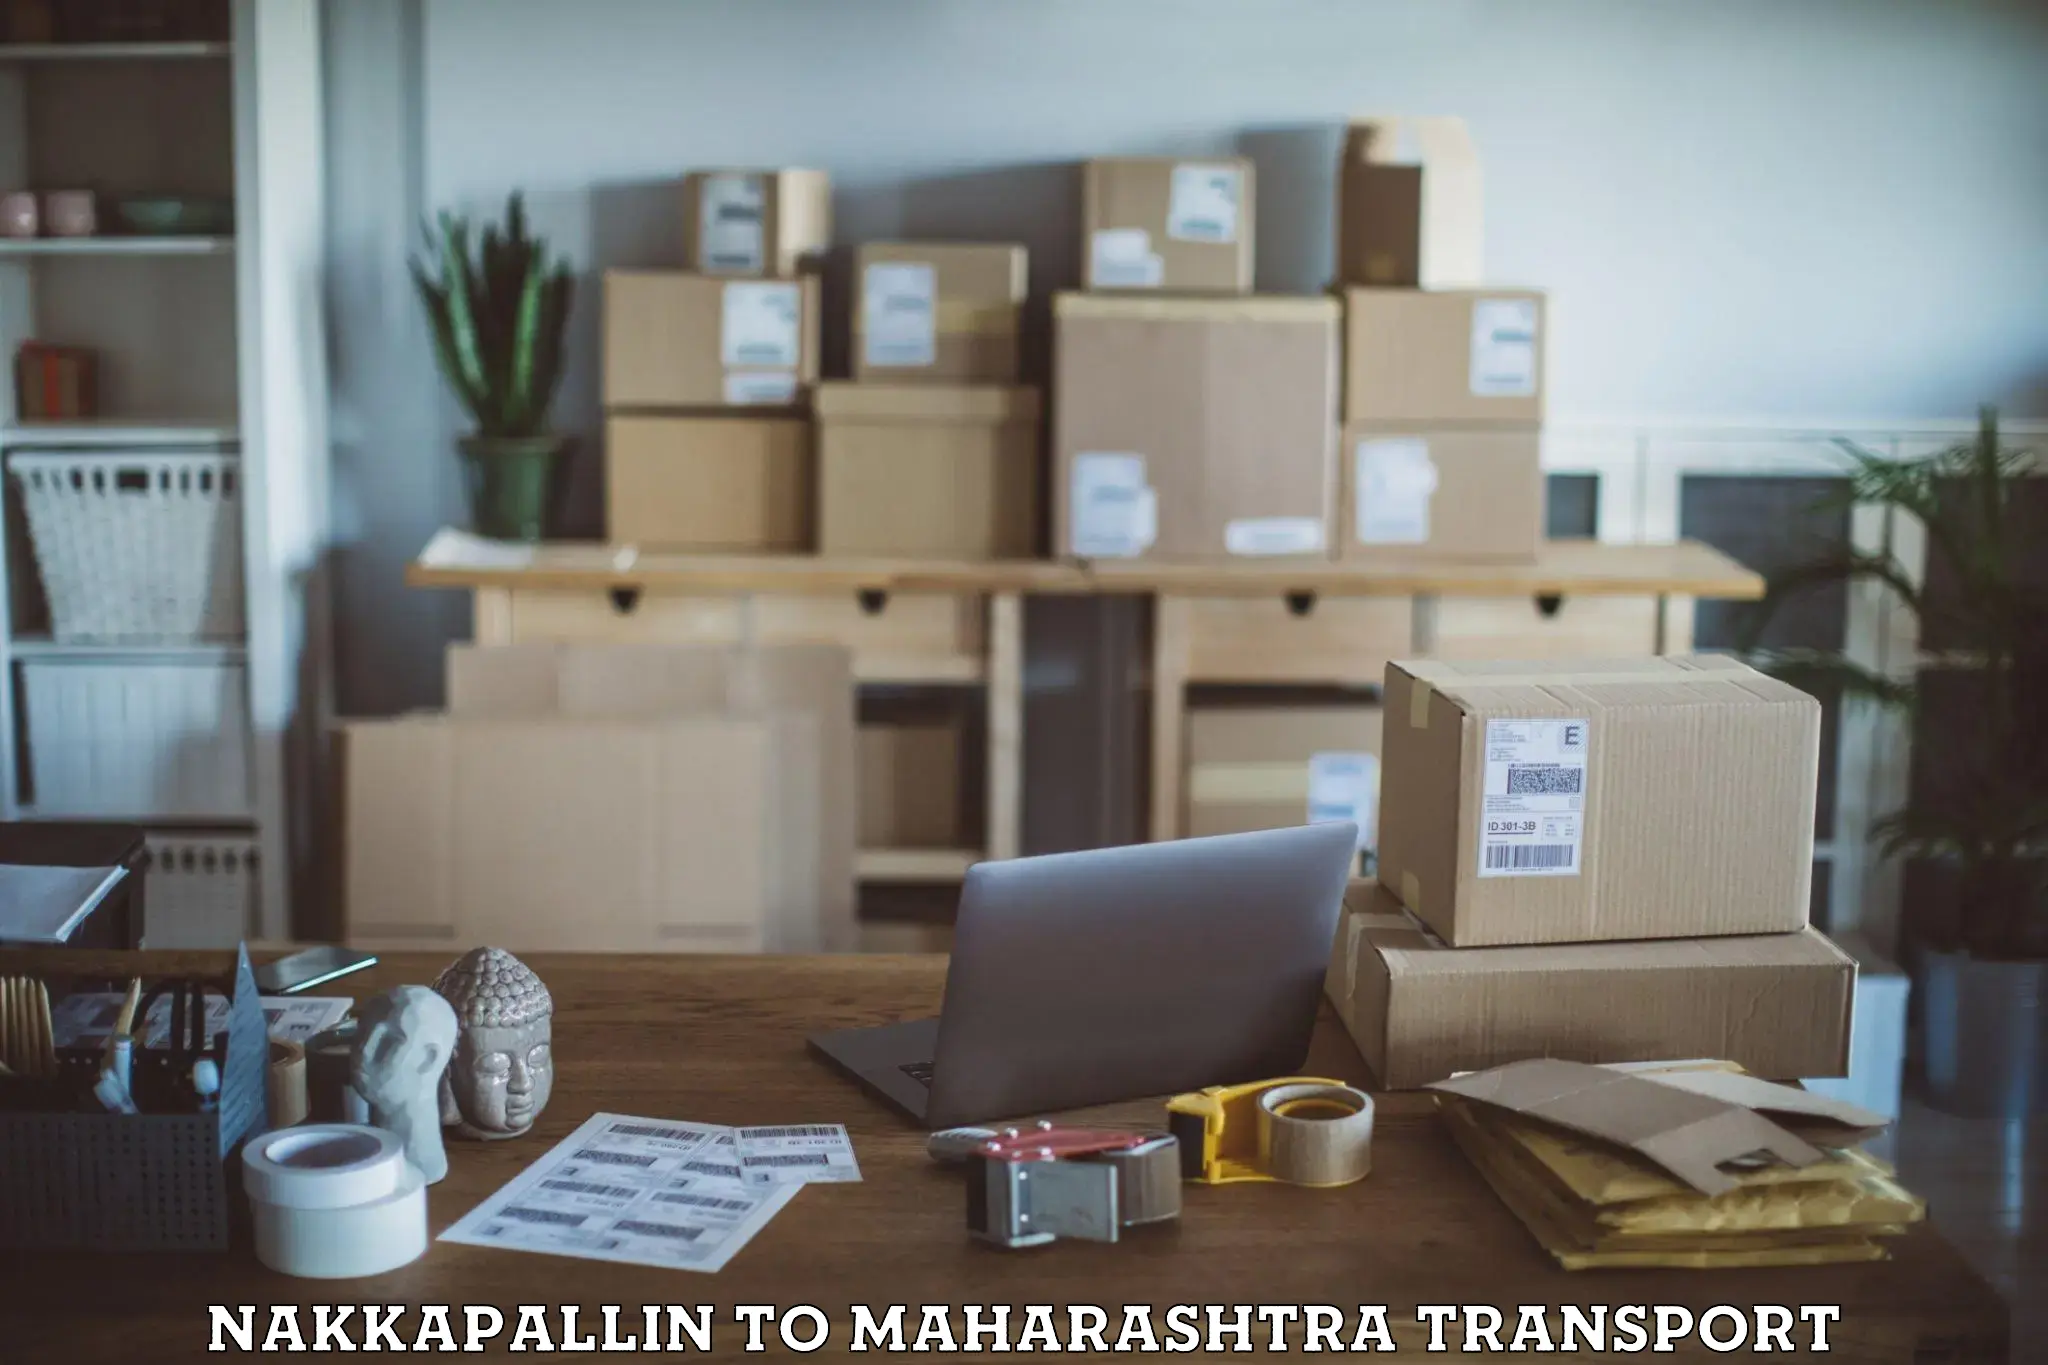 Transport in sharing Nakkapallin to Supe